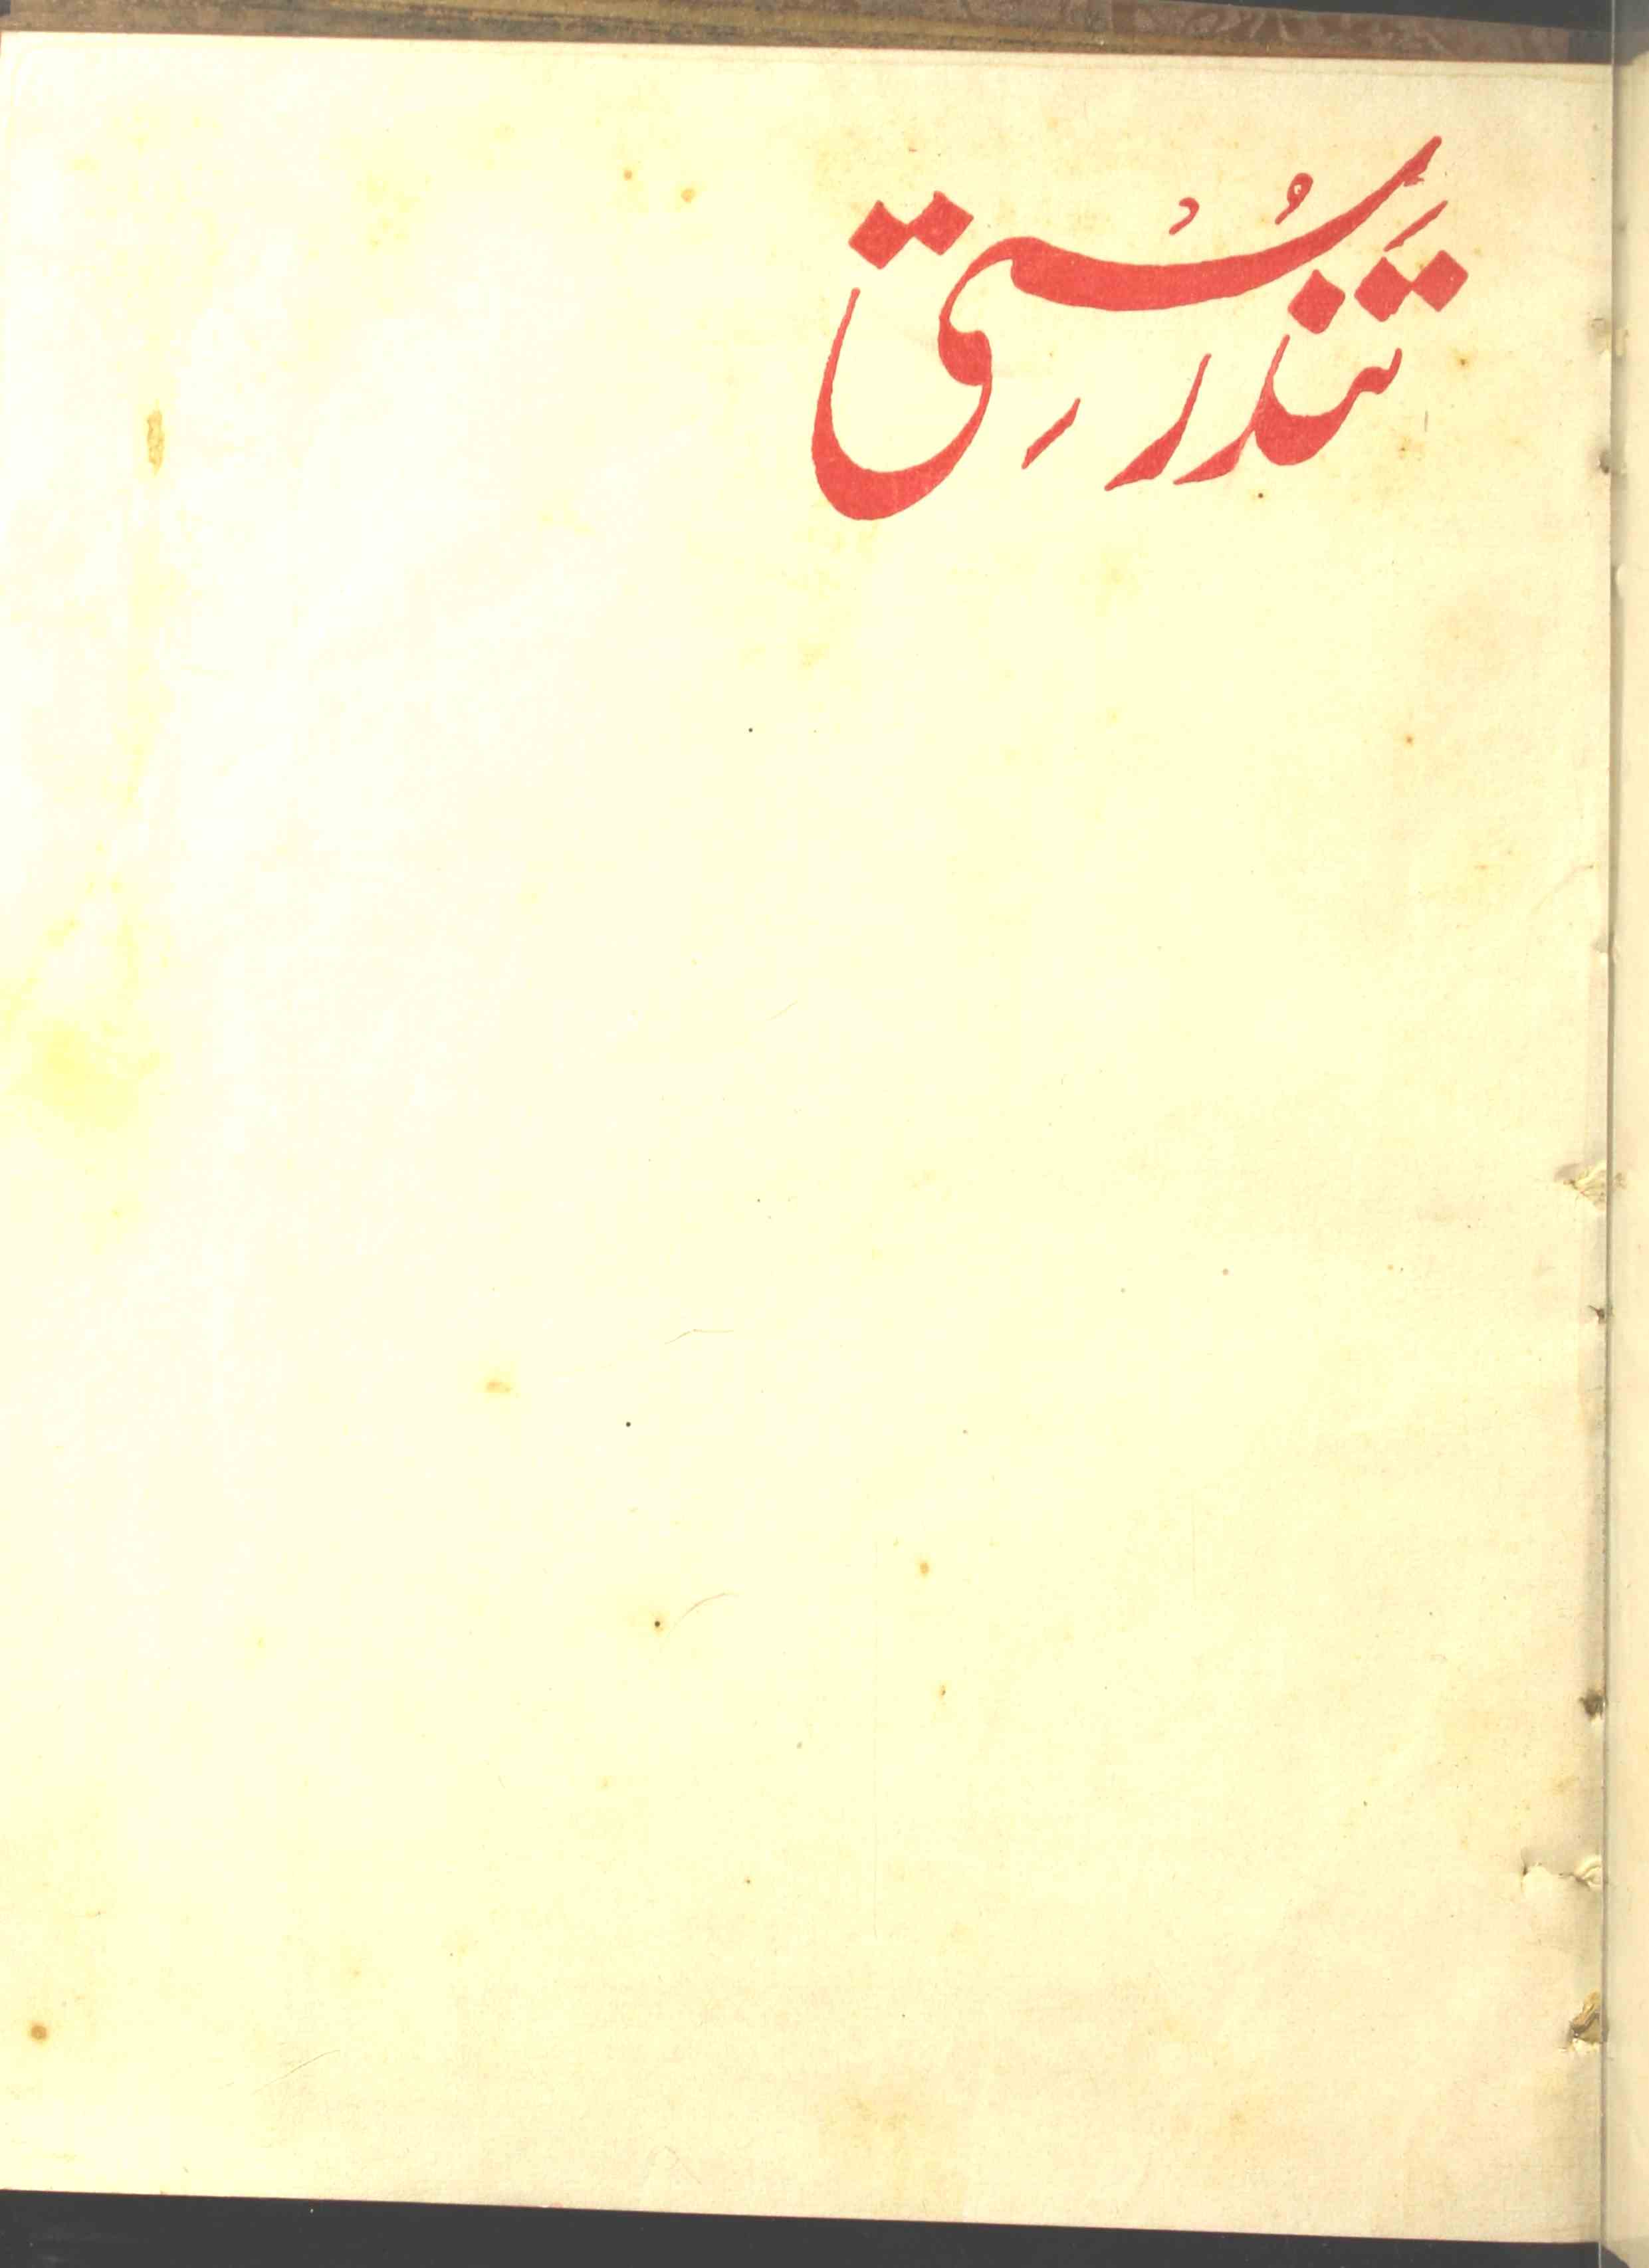 Tandrosti Jild 4 No 4 July 1939-Shumara Number-004